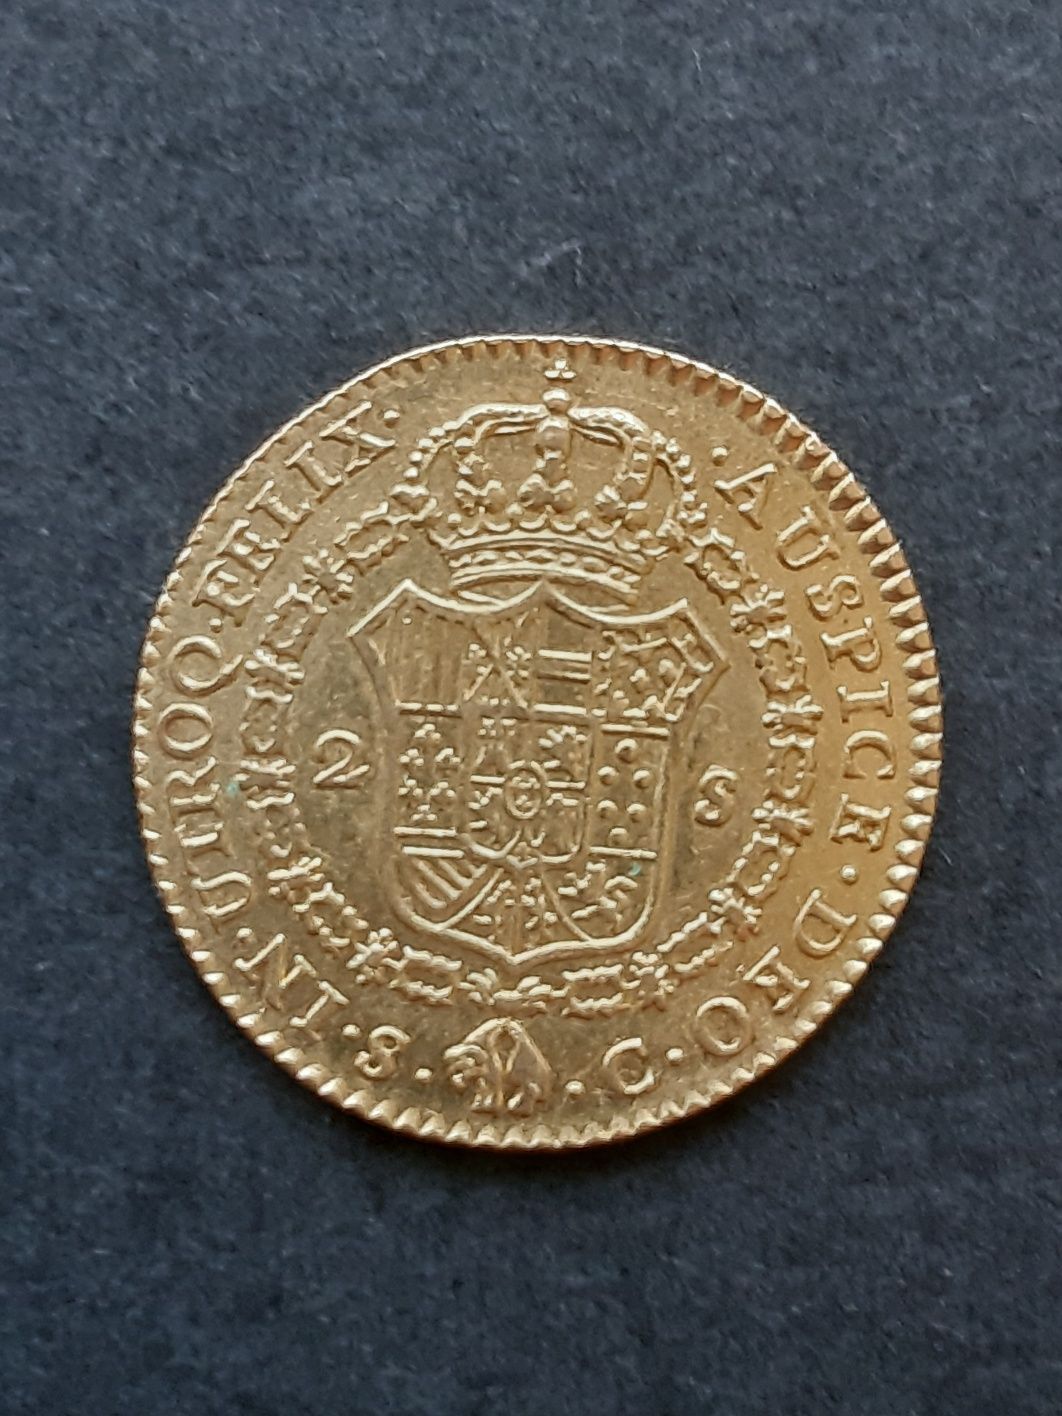 Monede spaniole, vechi,  din aur - 80 Reales si 2 Escudos)